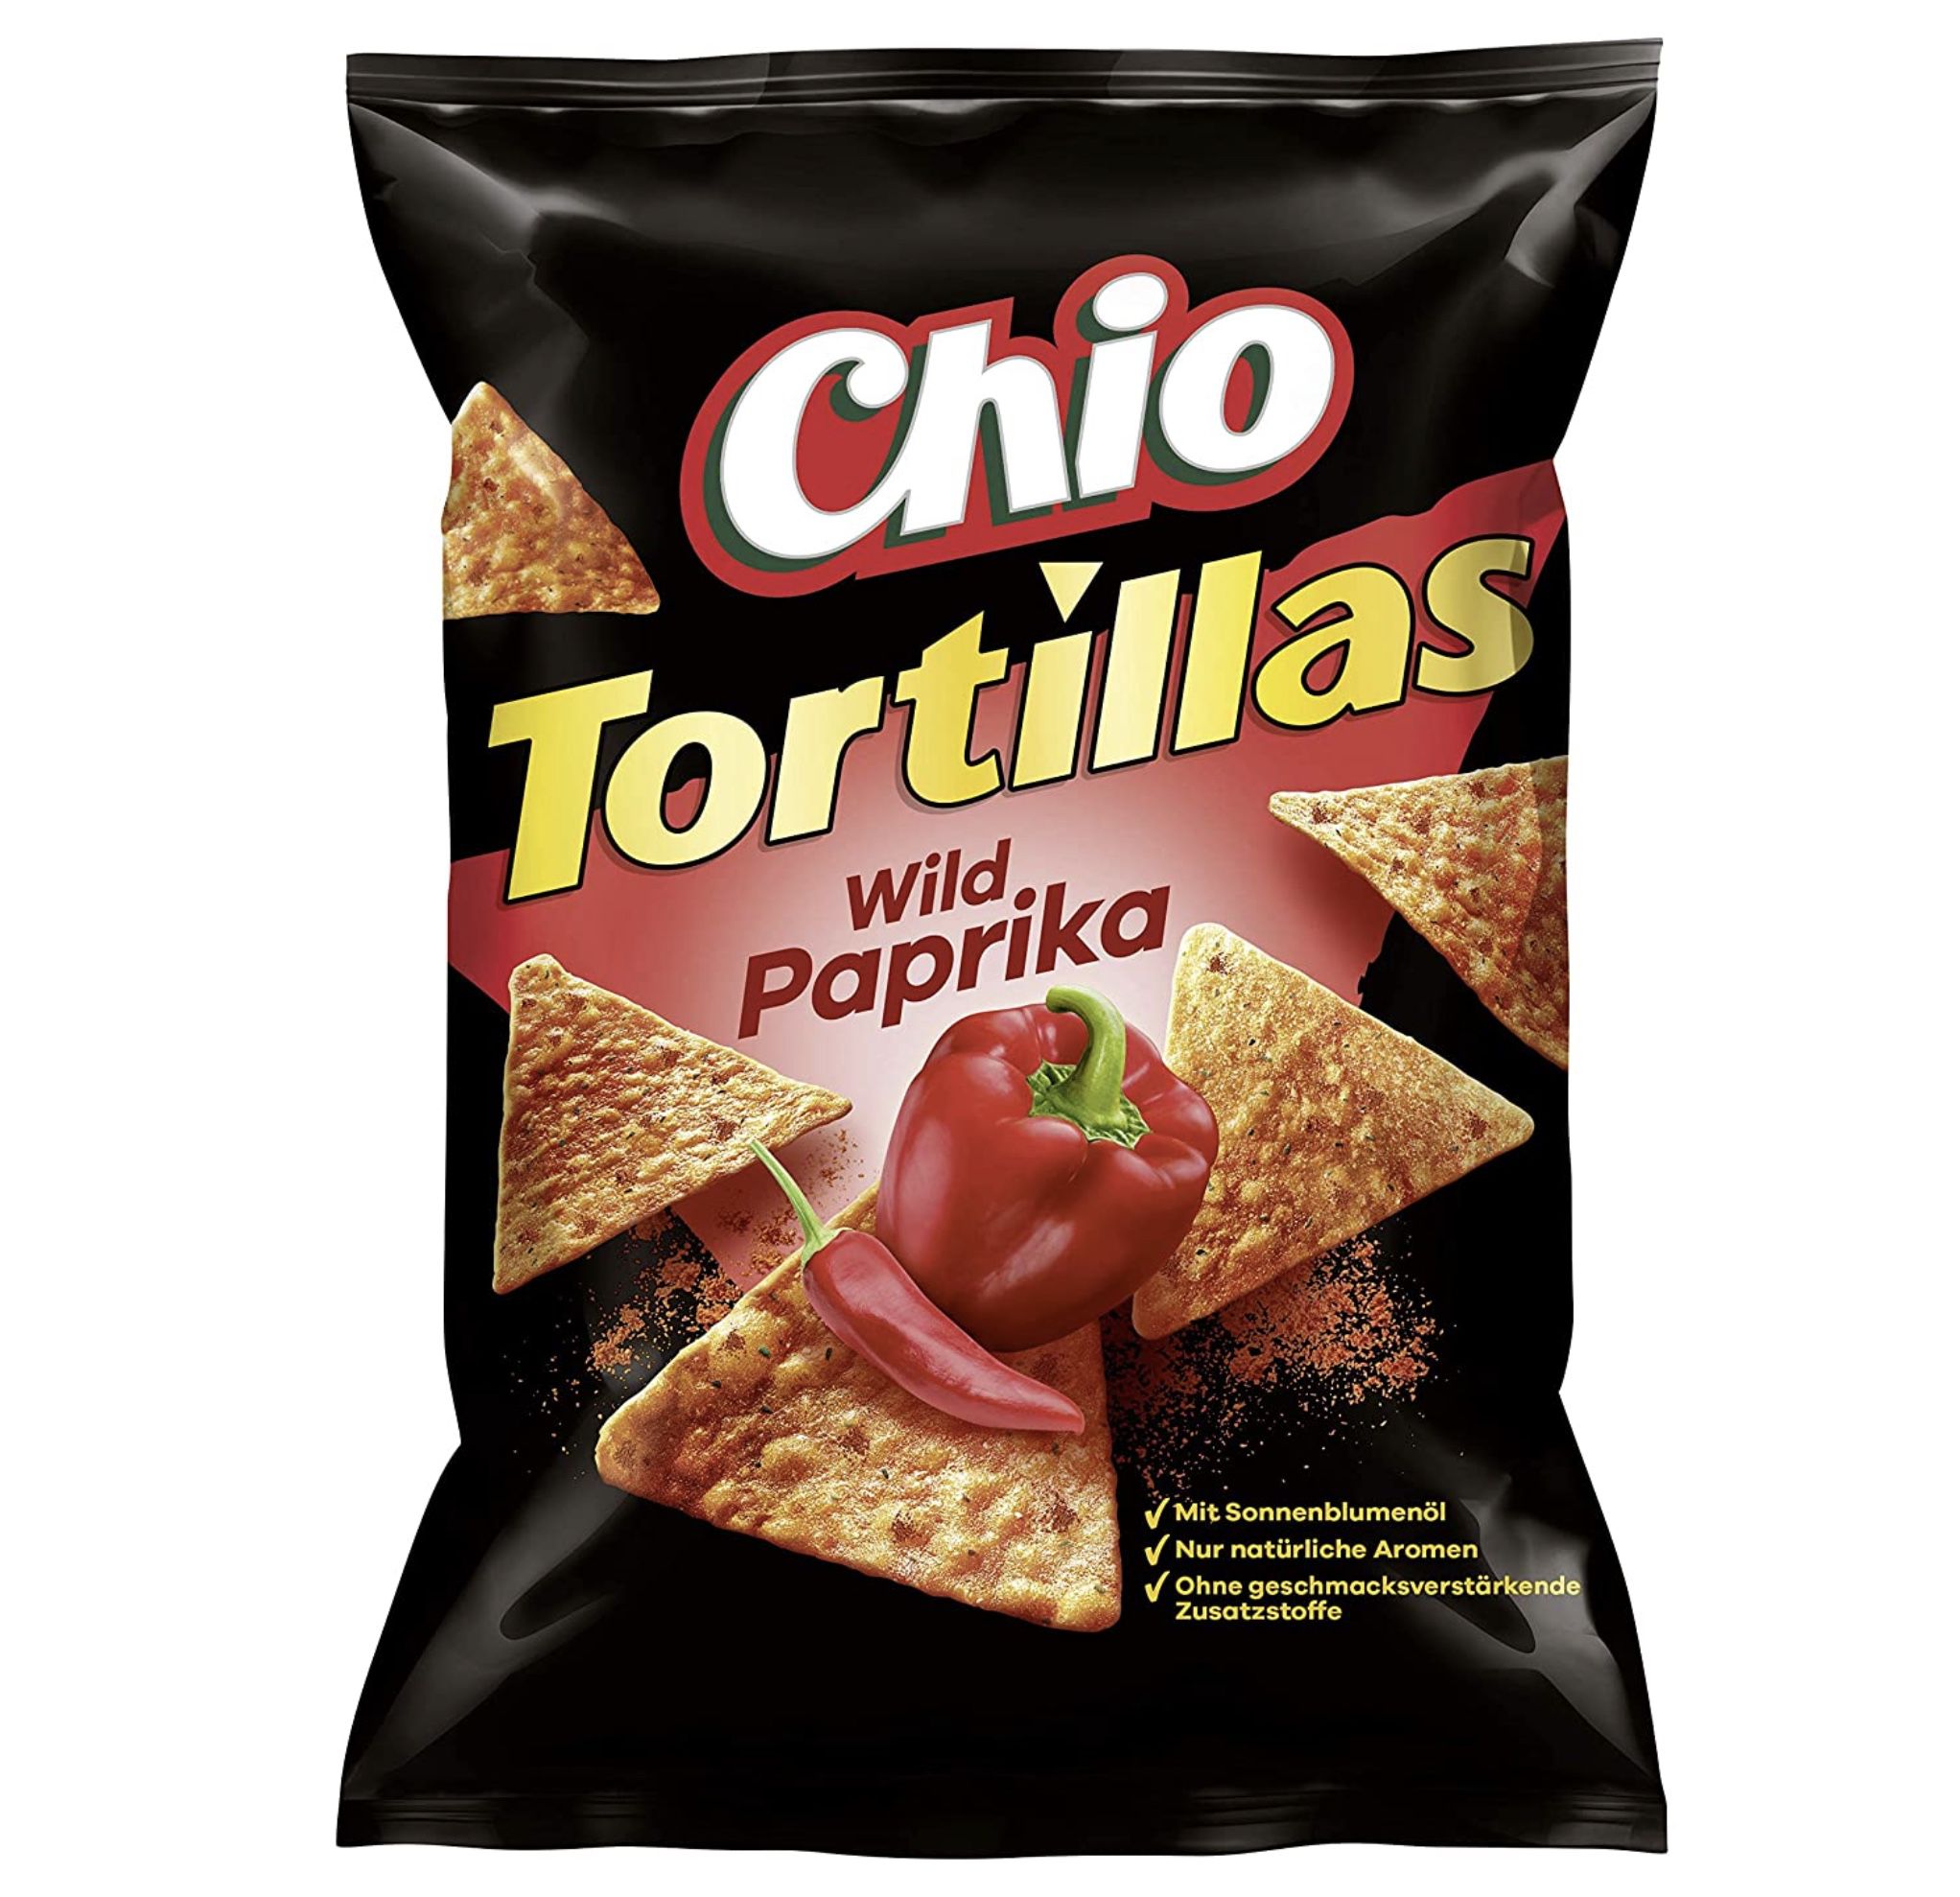 10x Chio Tortilla Chips Wild Paprika oder Salted je 8,88€ (statt 16€)   Prime Sparabo